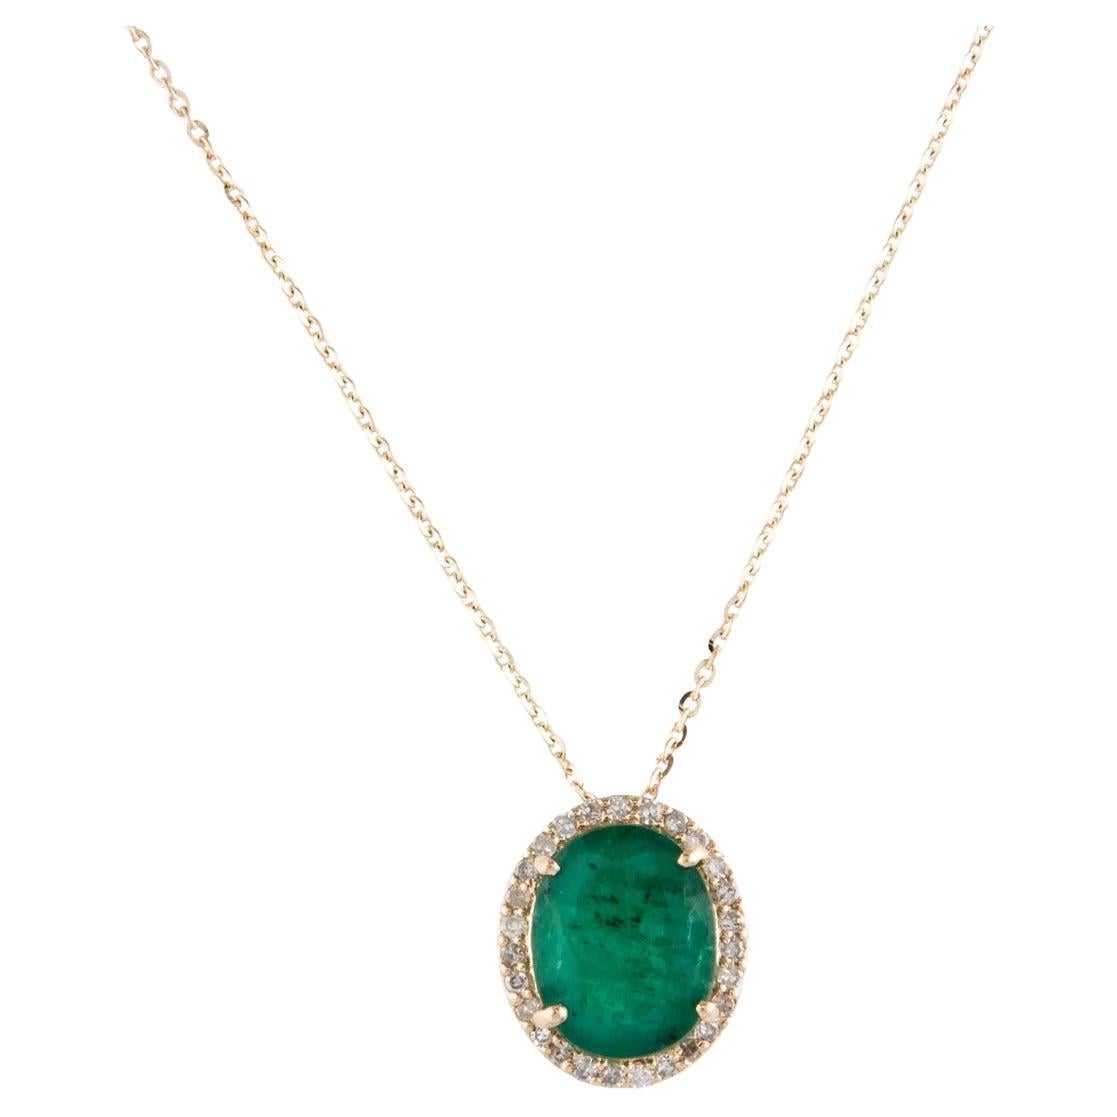 Vintage 14K Emerald & Diamond Pendant Necklace - 1.98ct Stunning Jewelry Piece